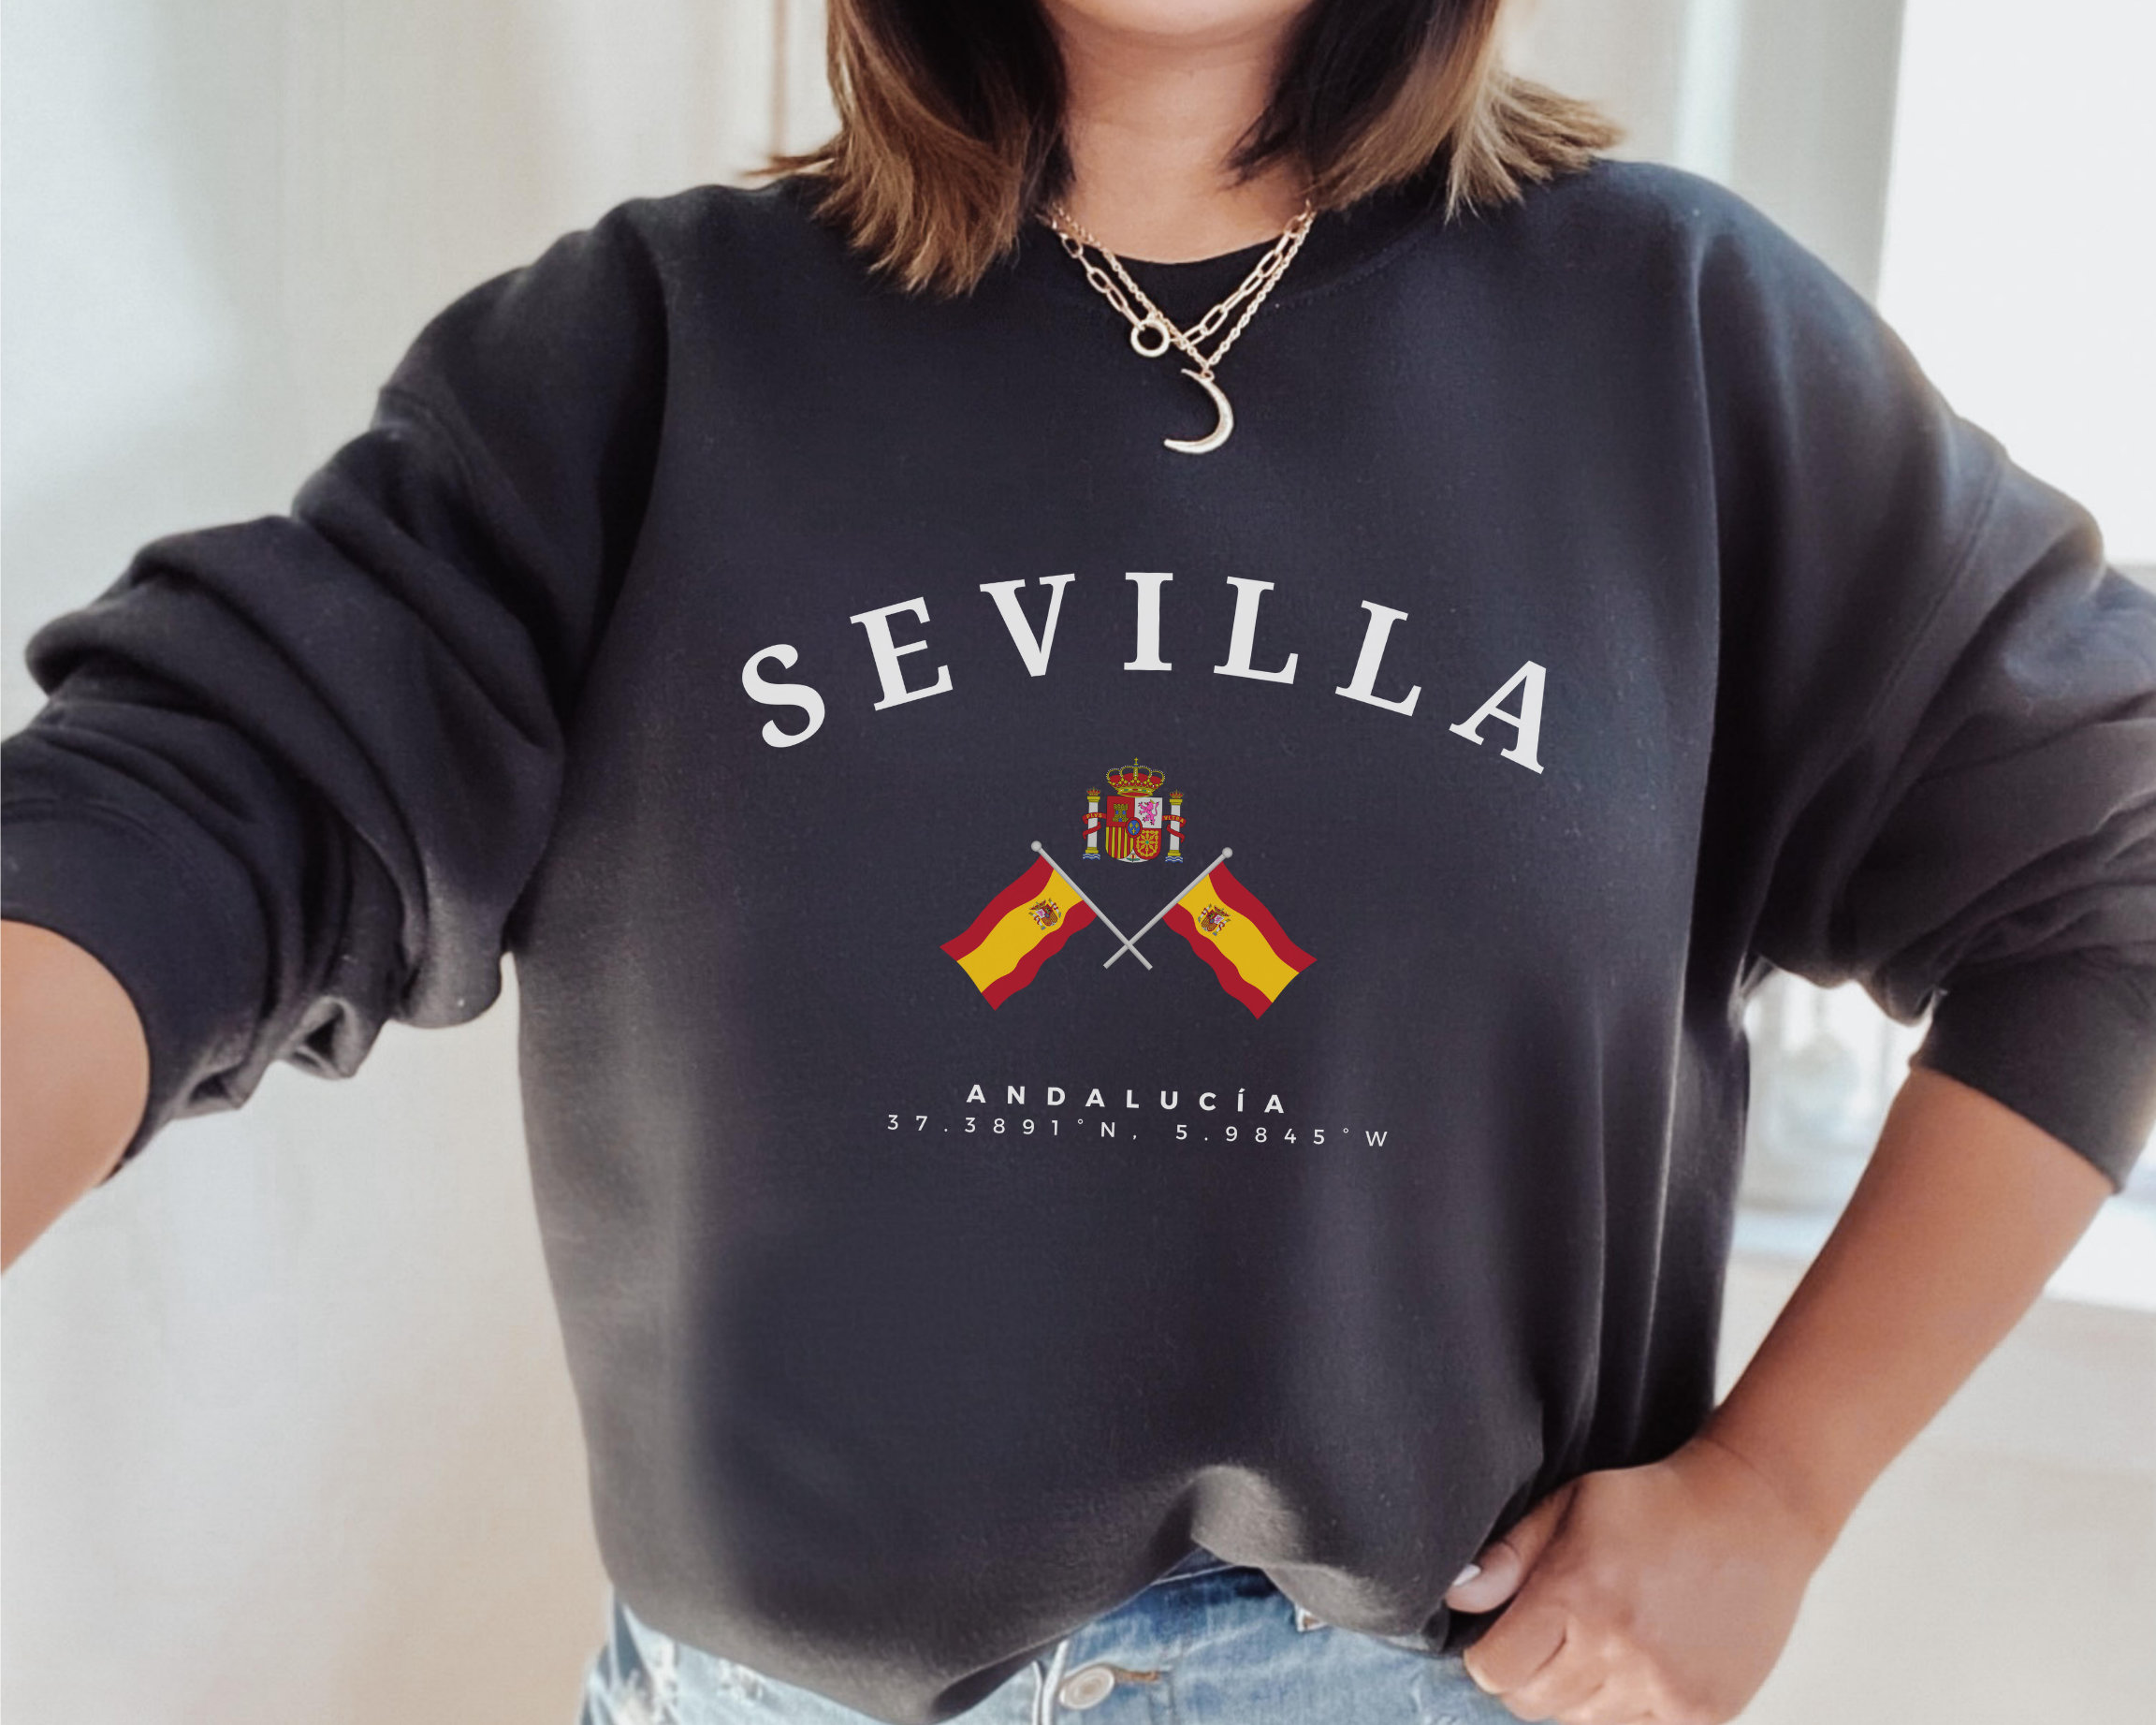 Camiseta Sevilla Skyline - Bufandea - Camiseta personalizada - 1890